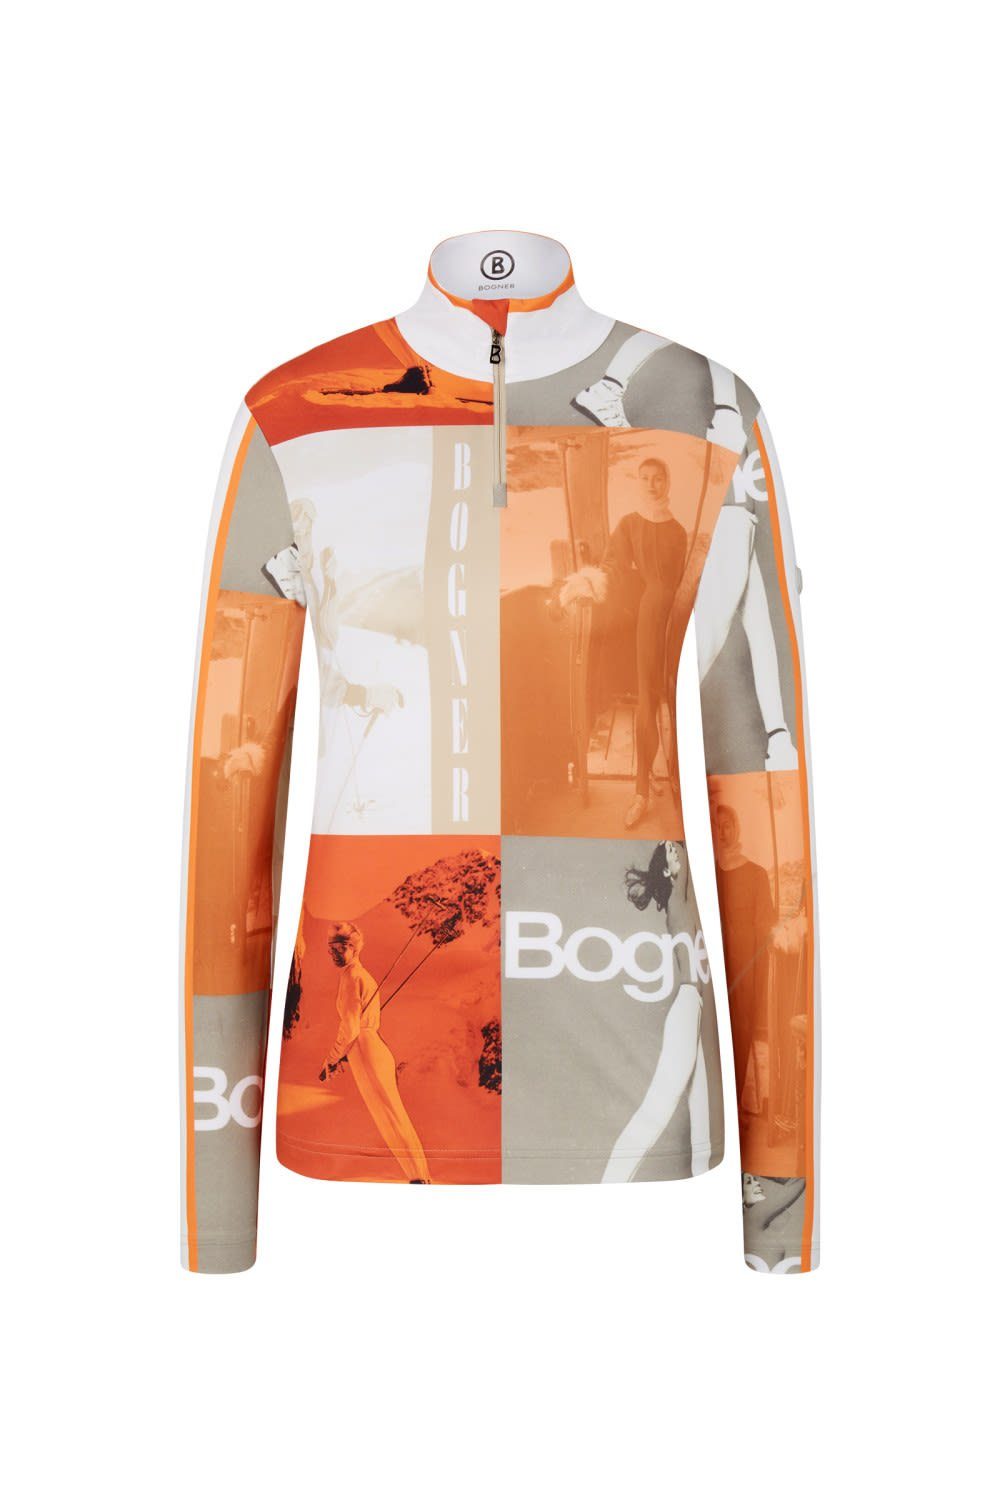 BOGNER Langarmshirt Langarm-Shirt Ladies Beline1 Bogner Damen Orange - Multicolor Sport